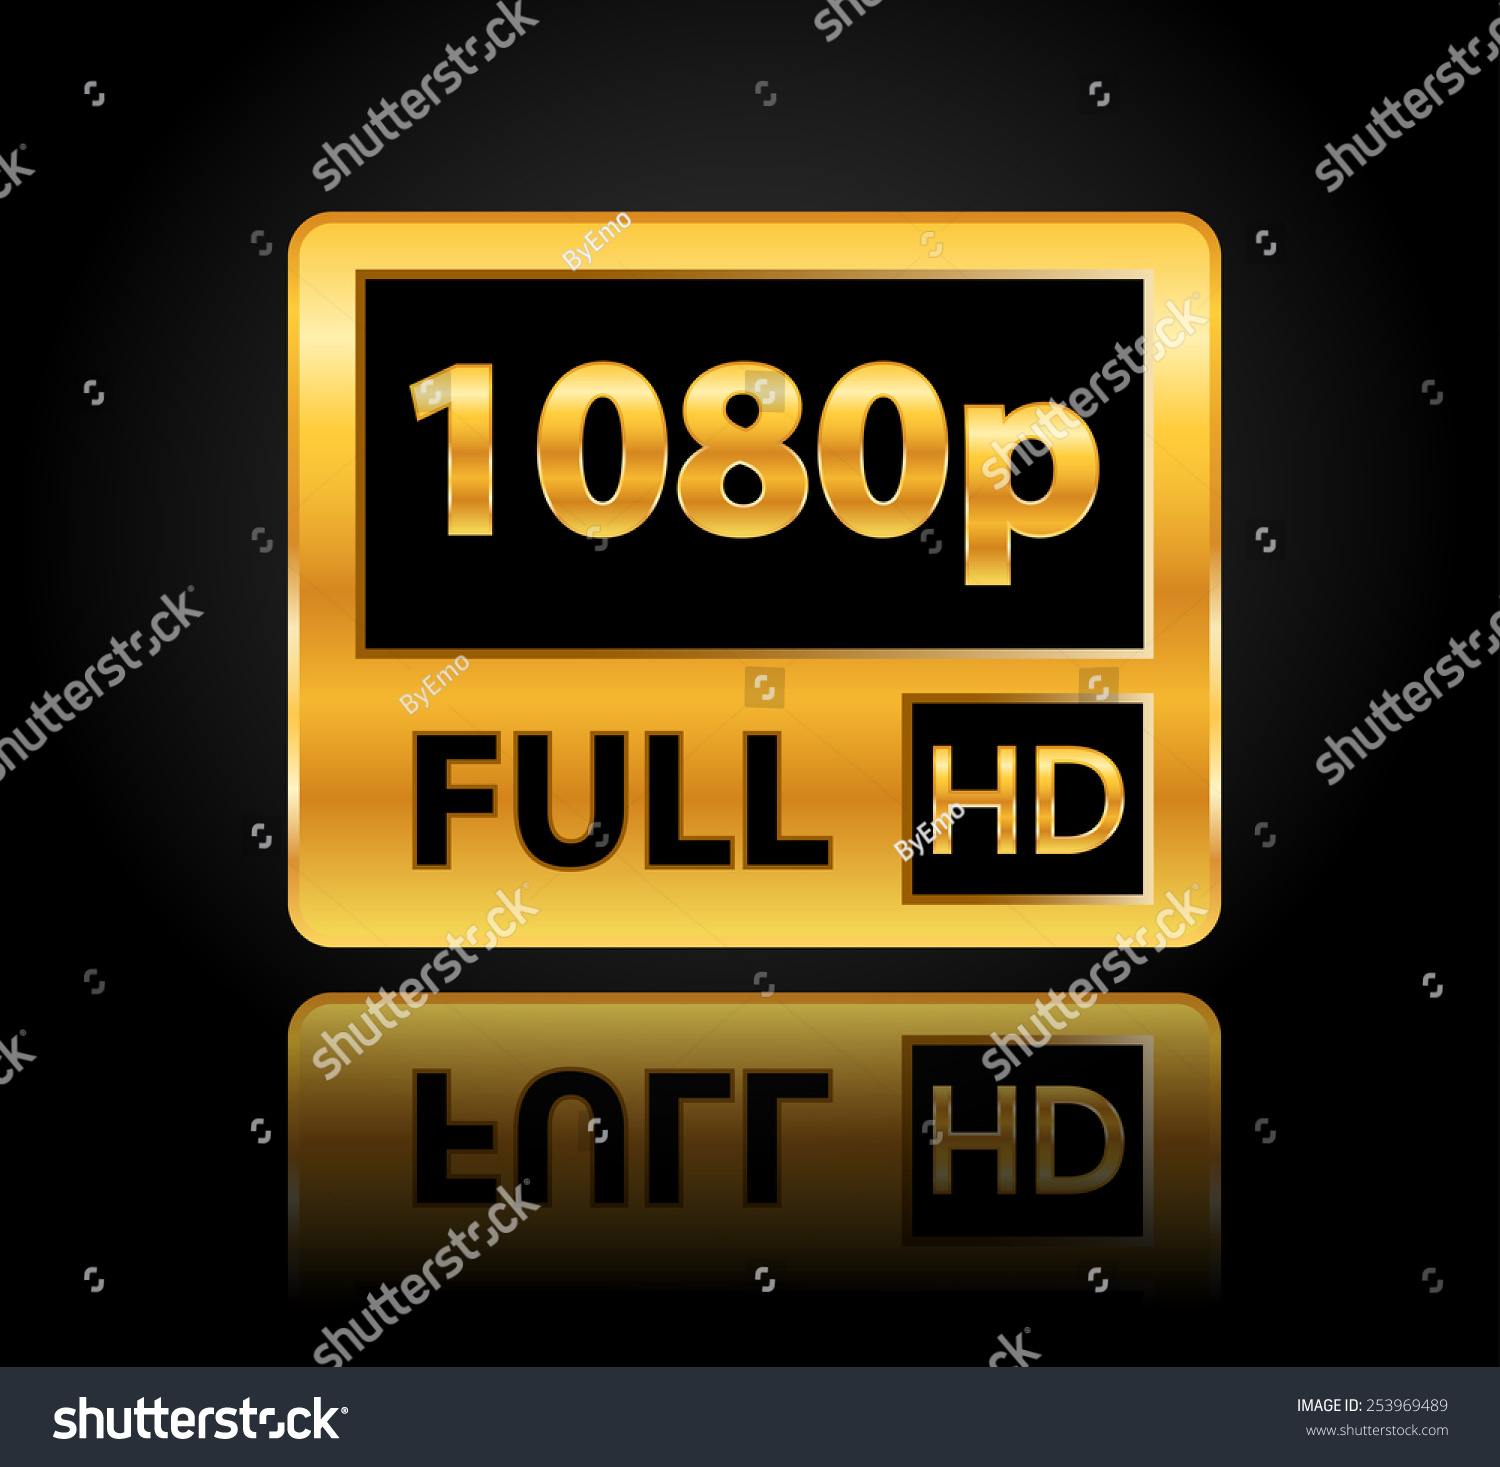 1080p Full Hd Sign Reflection Stock Vector 253969489 - Shutterstock